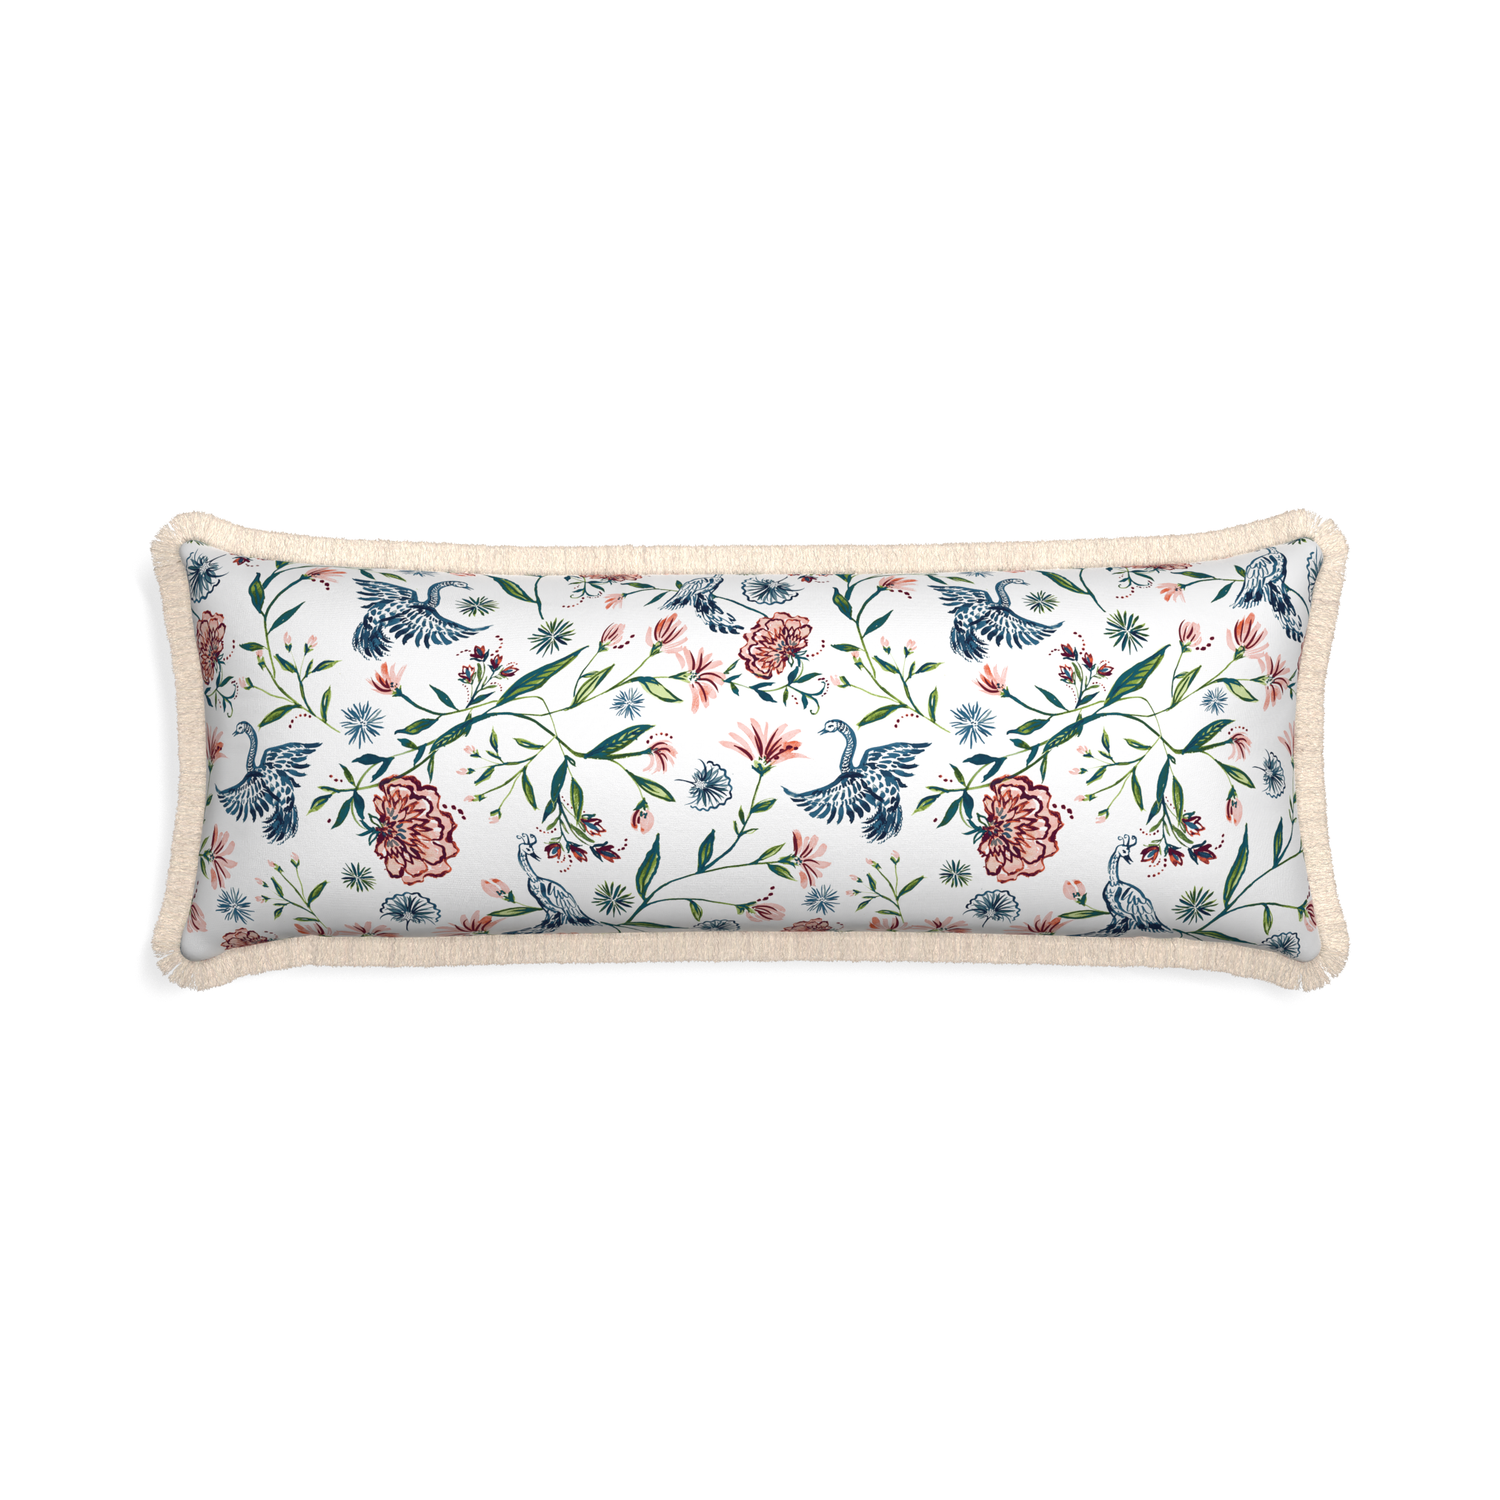 Xl-lumbar daphne cream custom pillow with cream fringe on white background